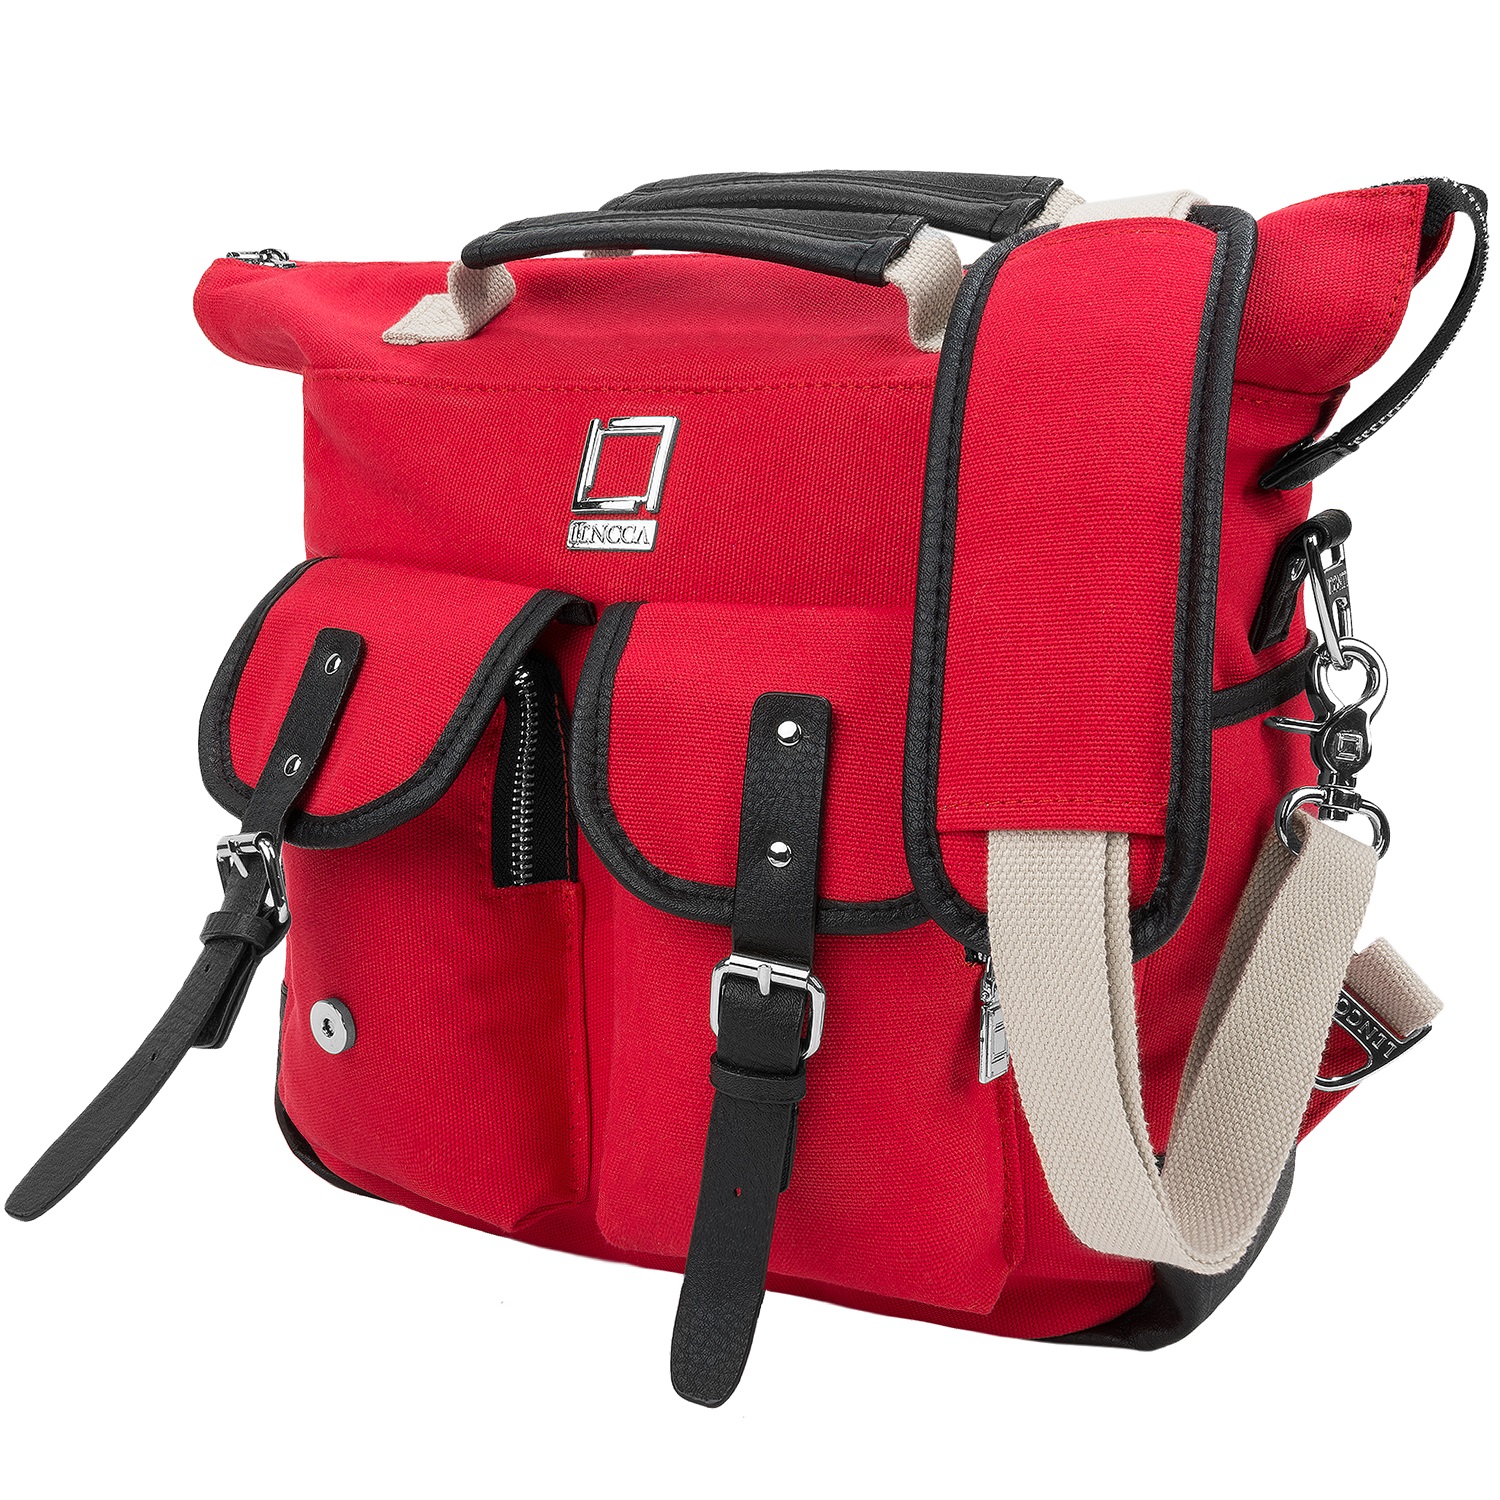 Lencca Mini Phlox Unisex Messenger / Backpack Carrying Bag fits 10, 10.1, 11, 11.6, 12 inch Tablets / eReaders / Netbooks (Red)